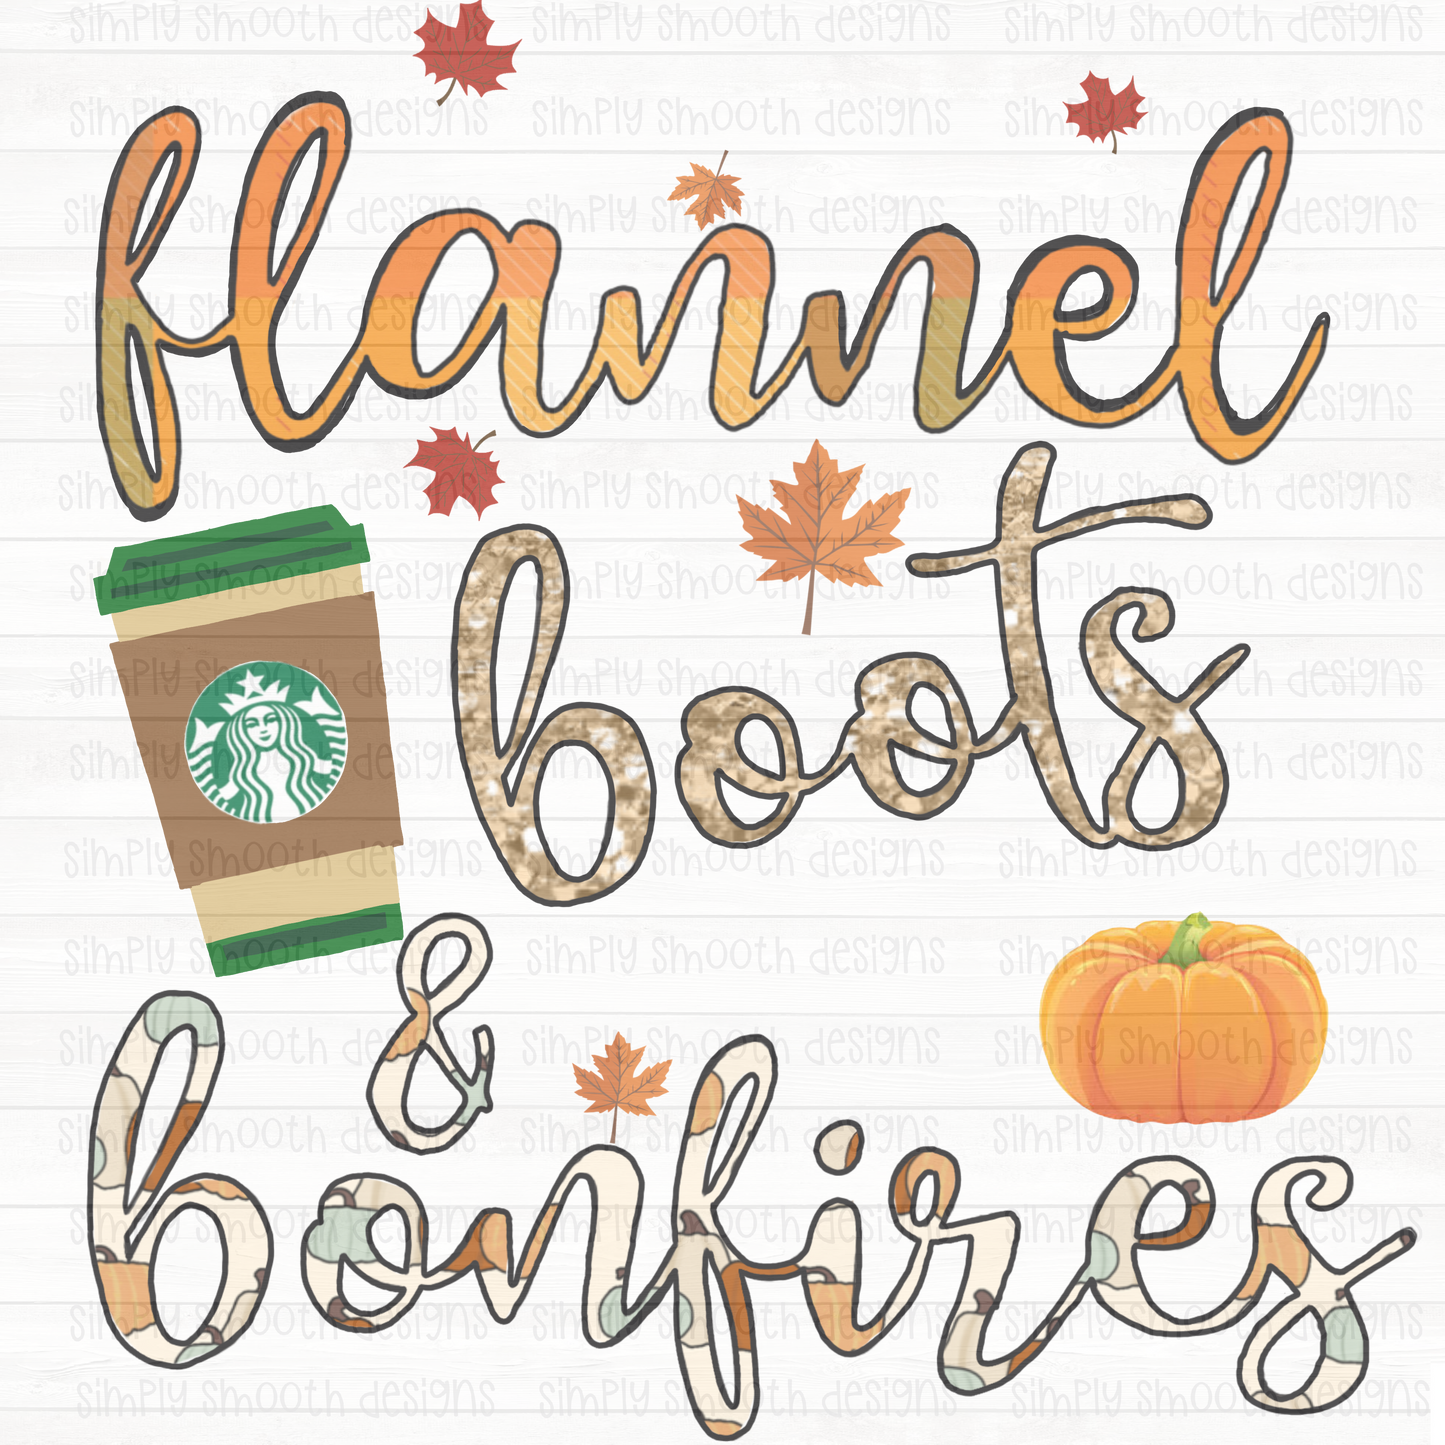 Flannel, boots & bonfires